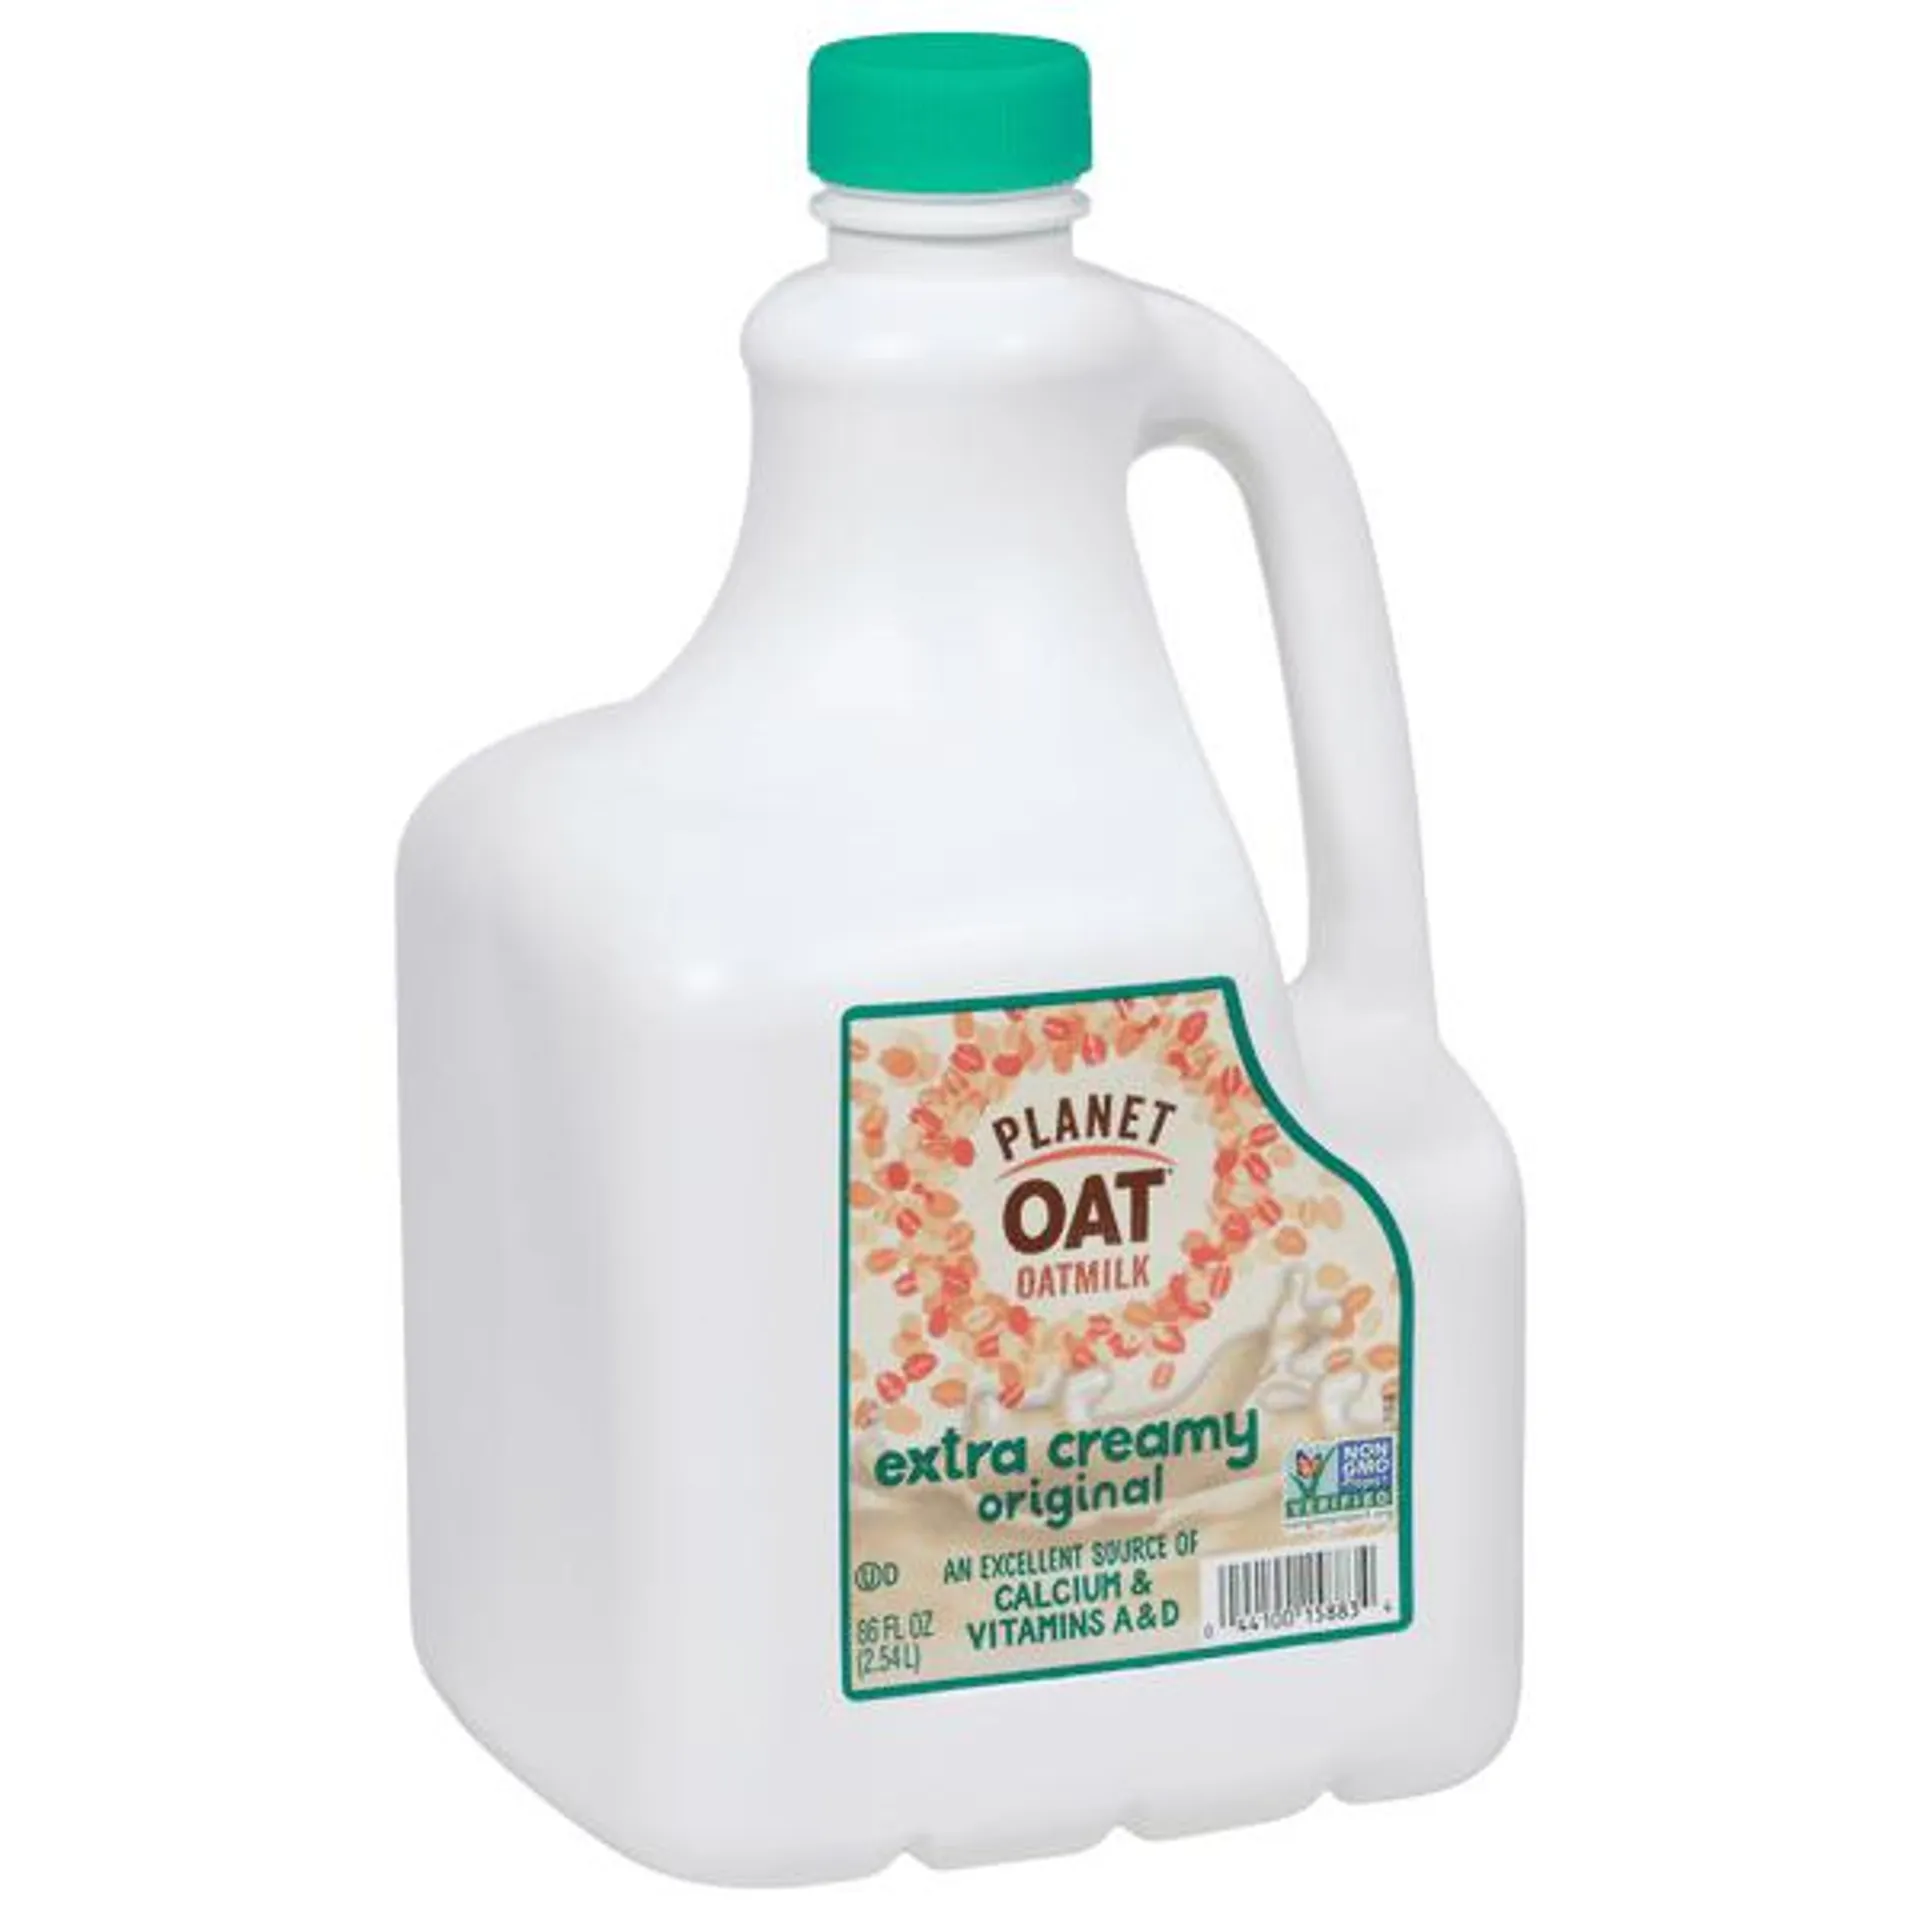 Planet Oat Oatmilk, Original, Extra Creamy